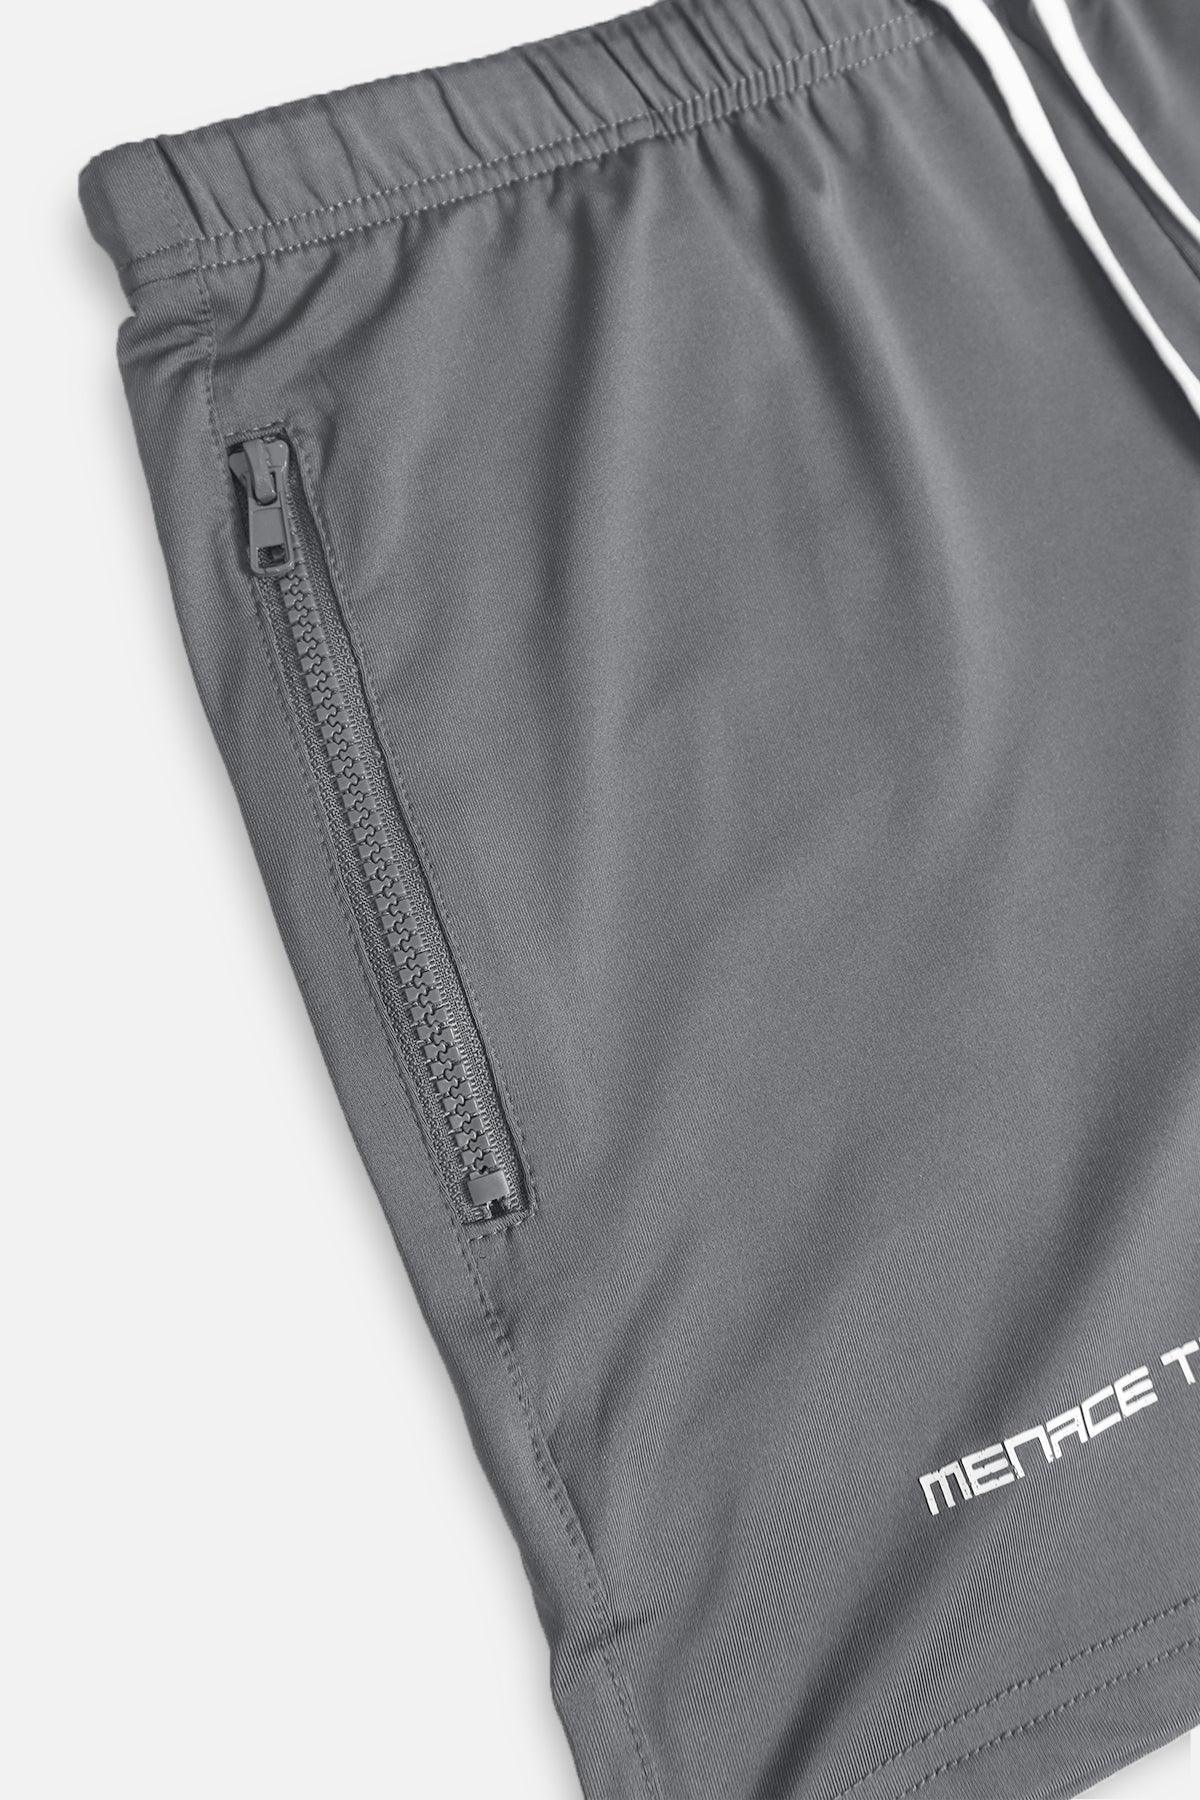 Agile Bodybuilding 4'' Shorts w Zipper Pockets - Gray Logo - Jed North